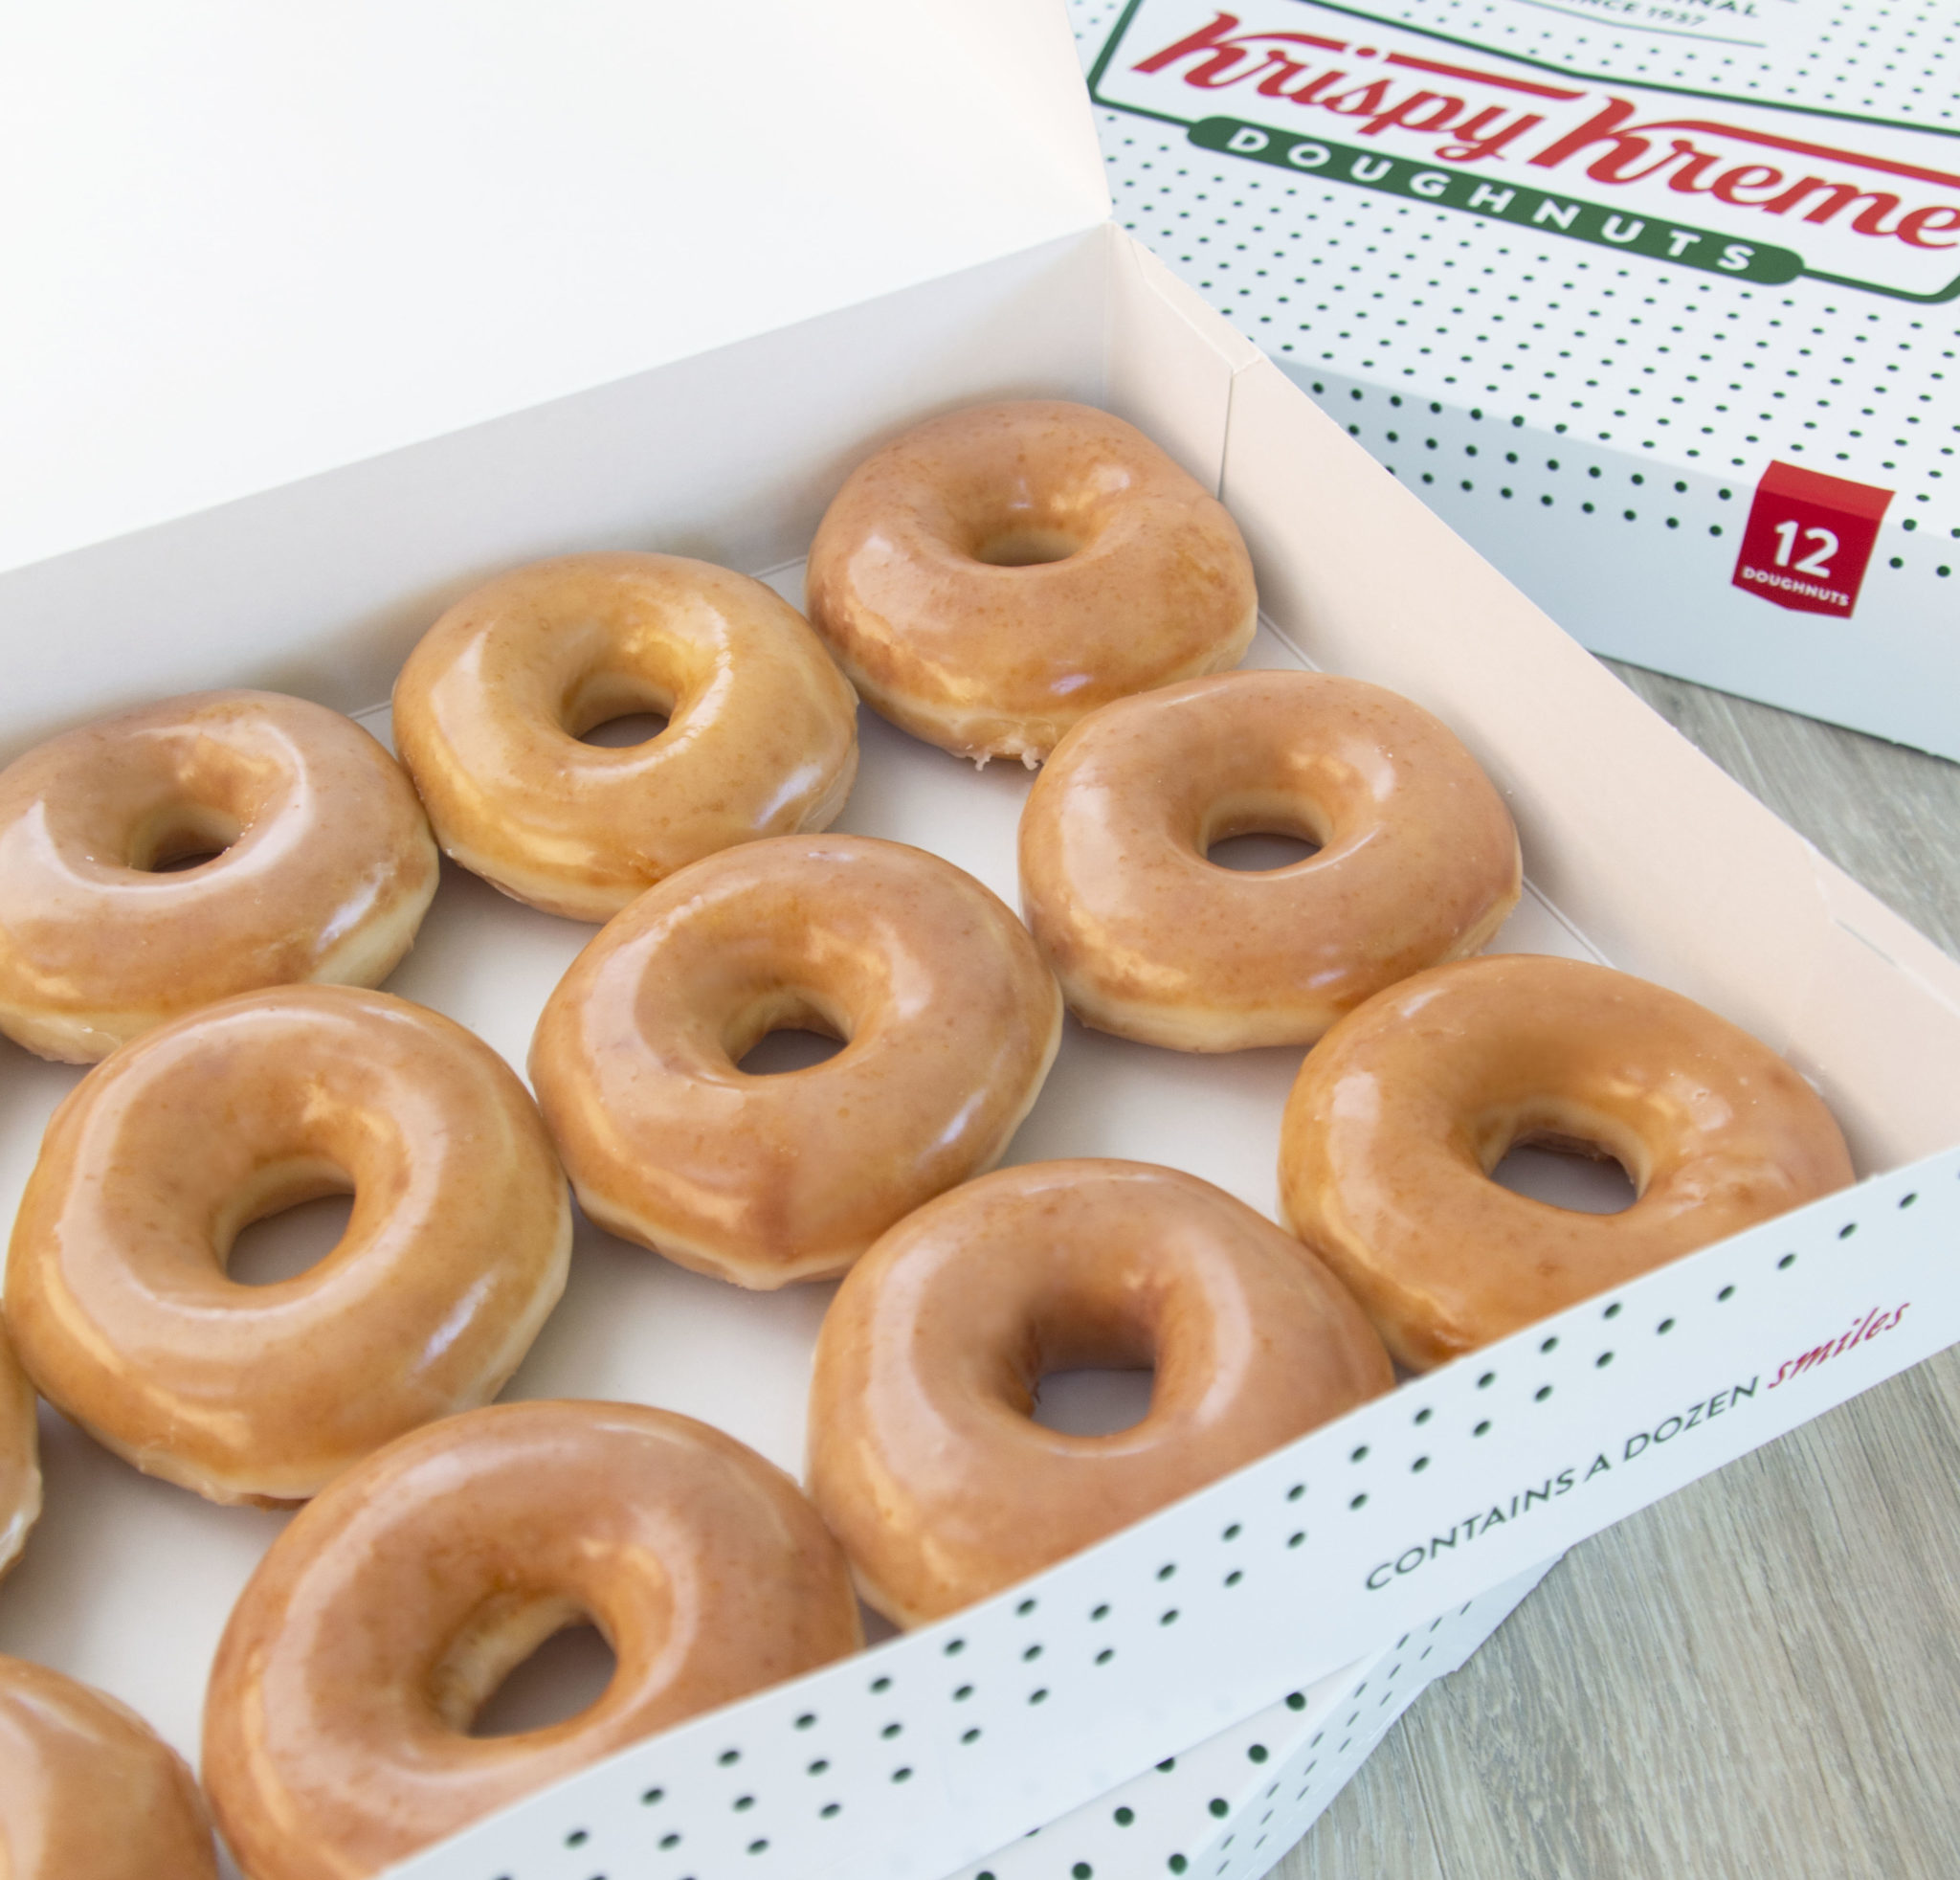 box of Krispy Kreme glazed donuts